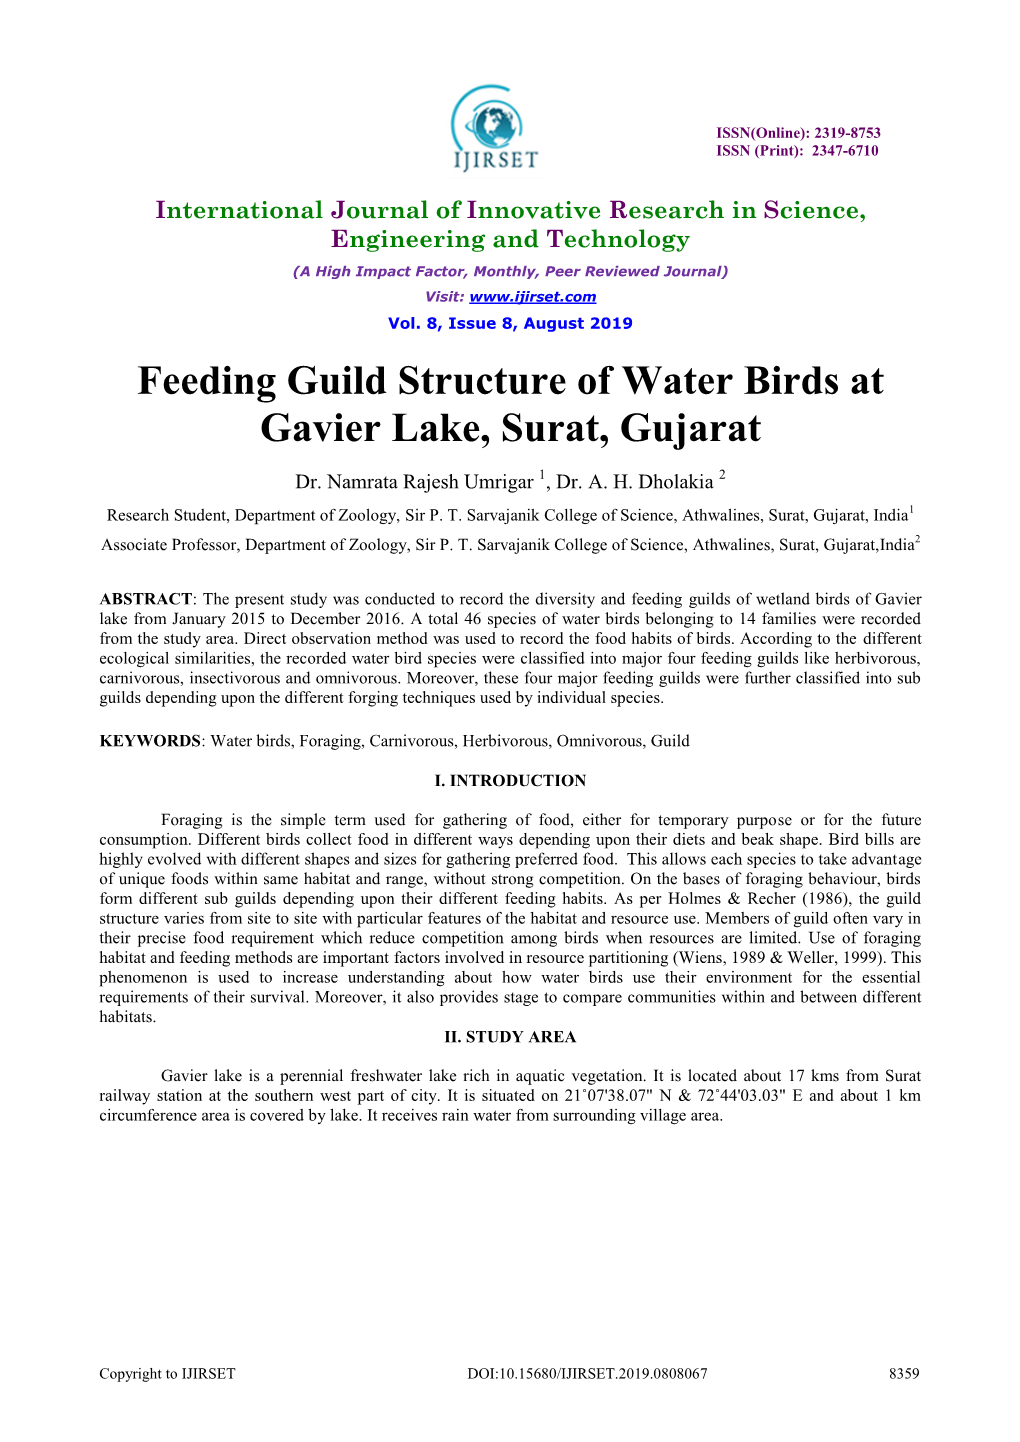 Feeding Guild Structure of Water Birds at Gavier Lake, Surat, Gujarat